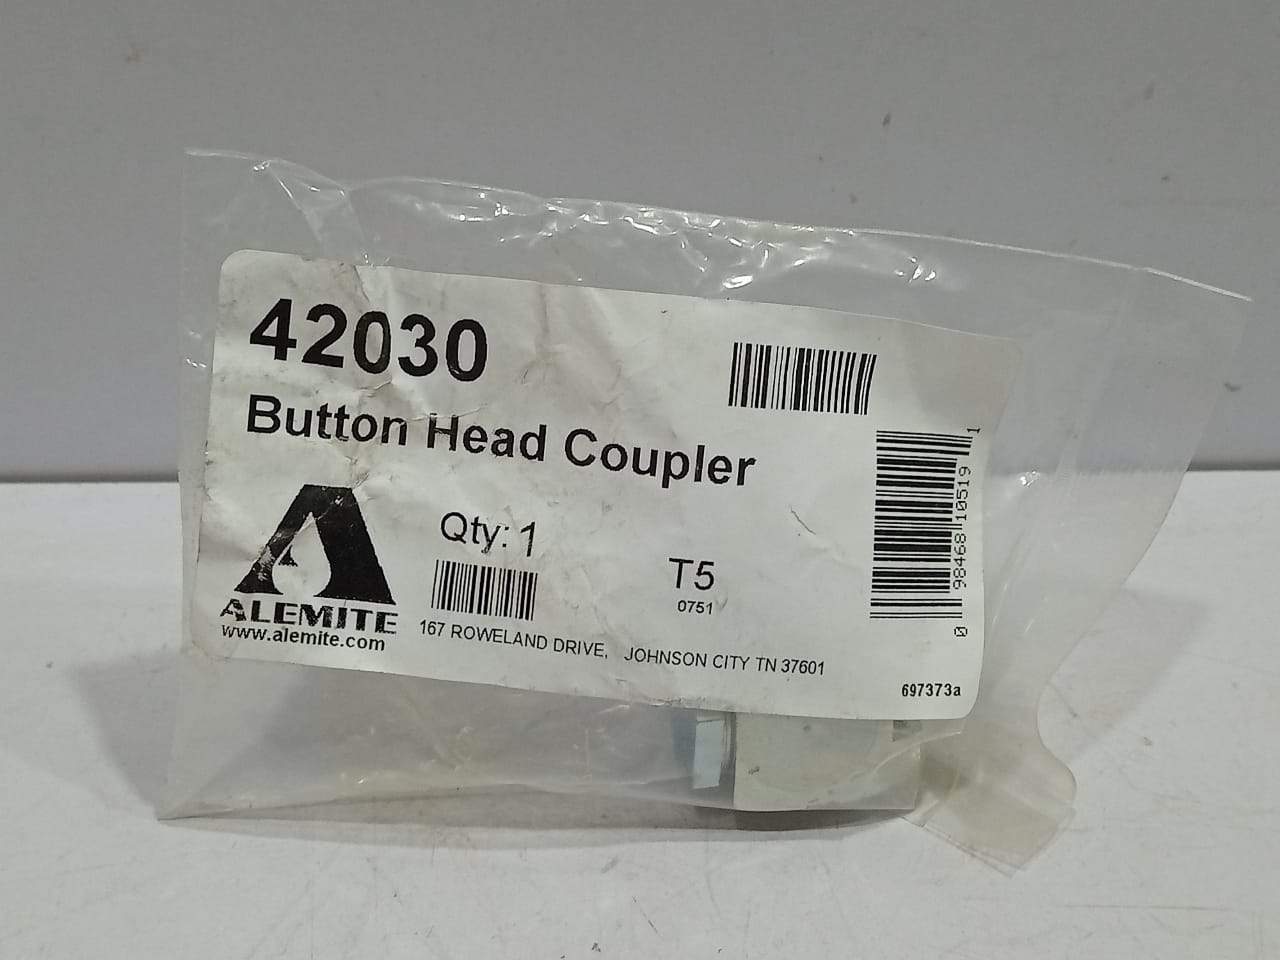 Alemite 42030 Button Head Coupler